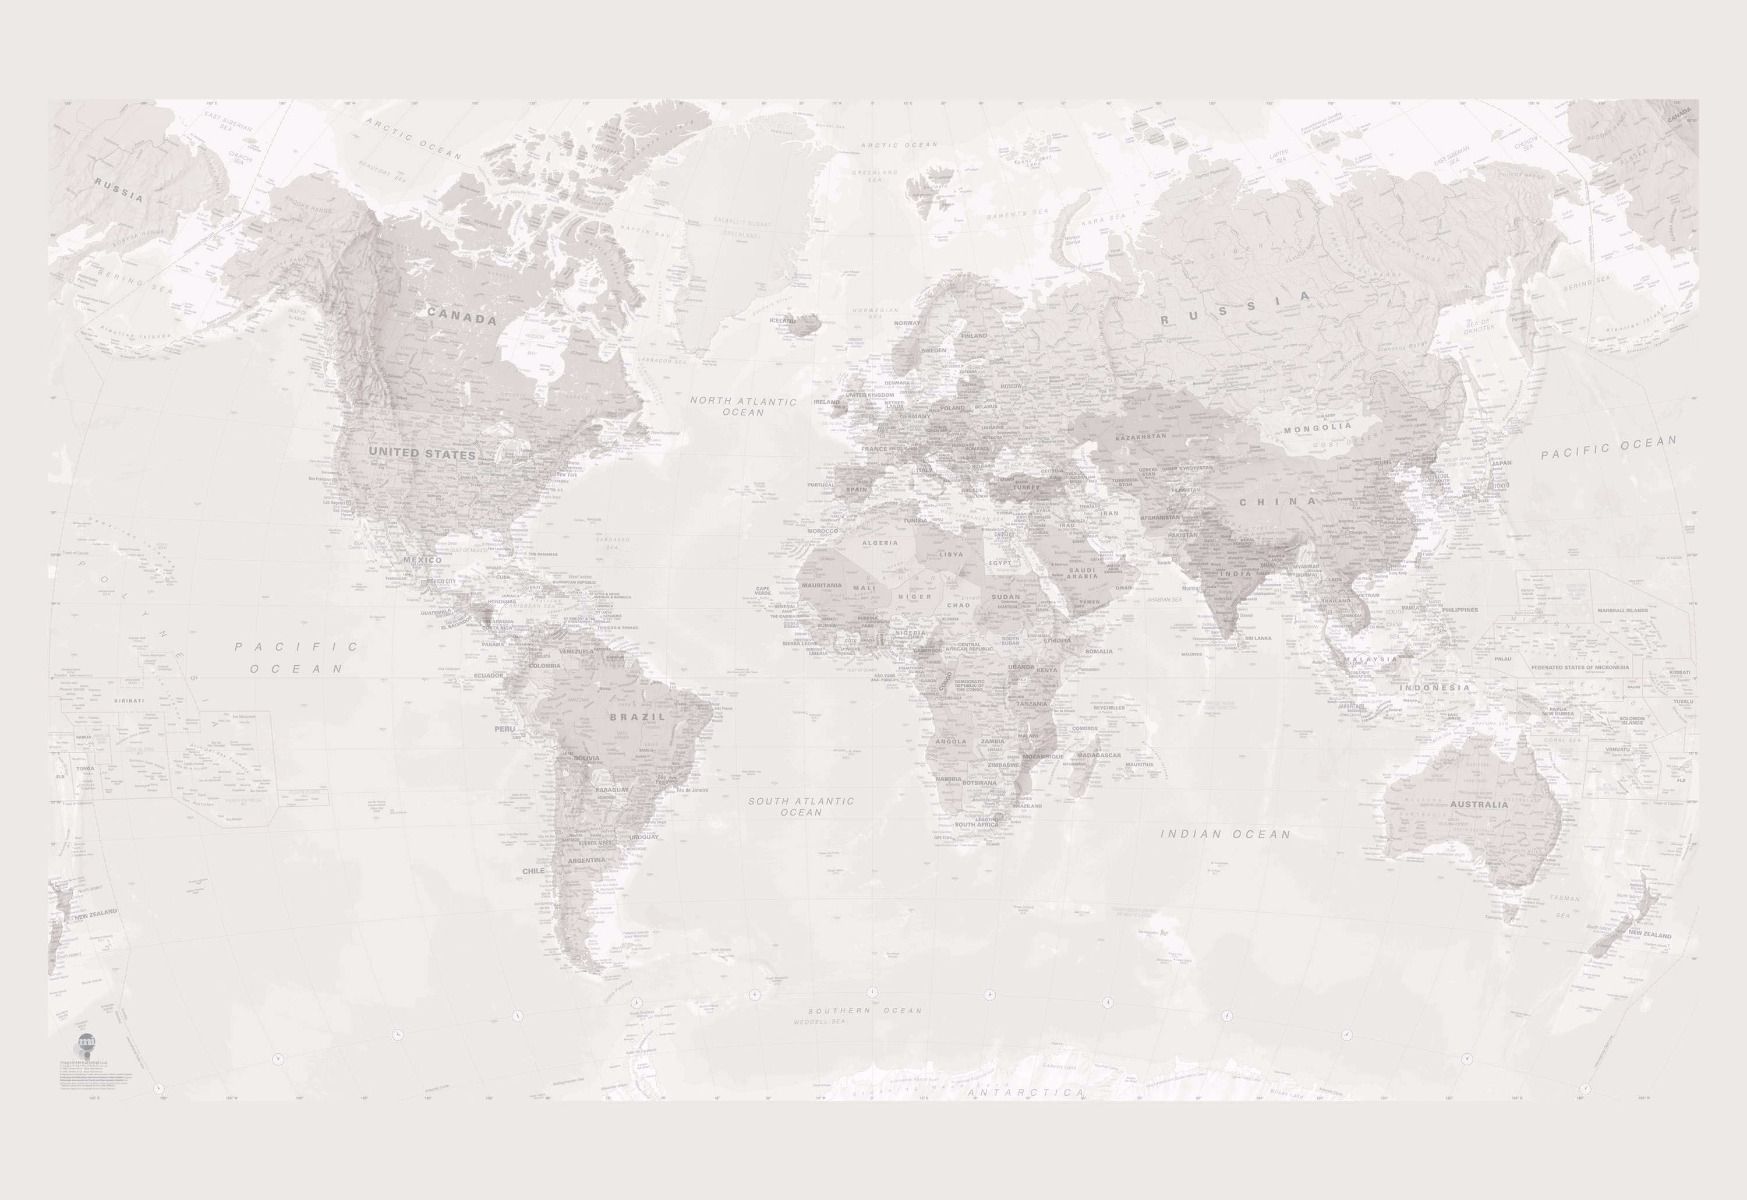 Free World Map Wallpaper Downloads 300 World Map Wallpapers for FREE   Wallpaperscom